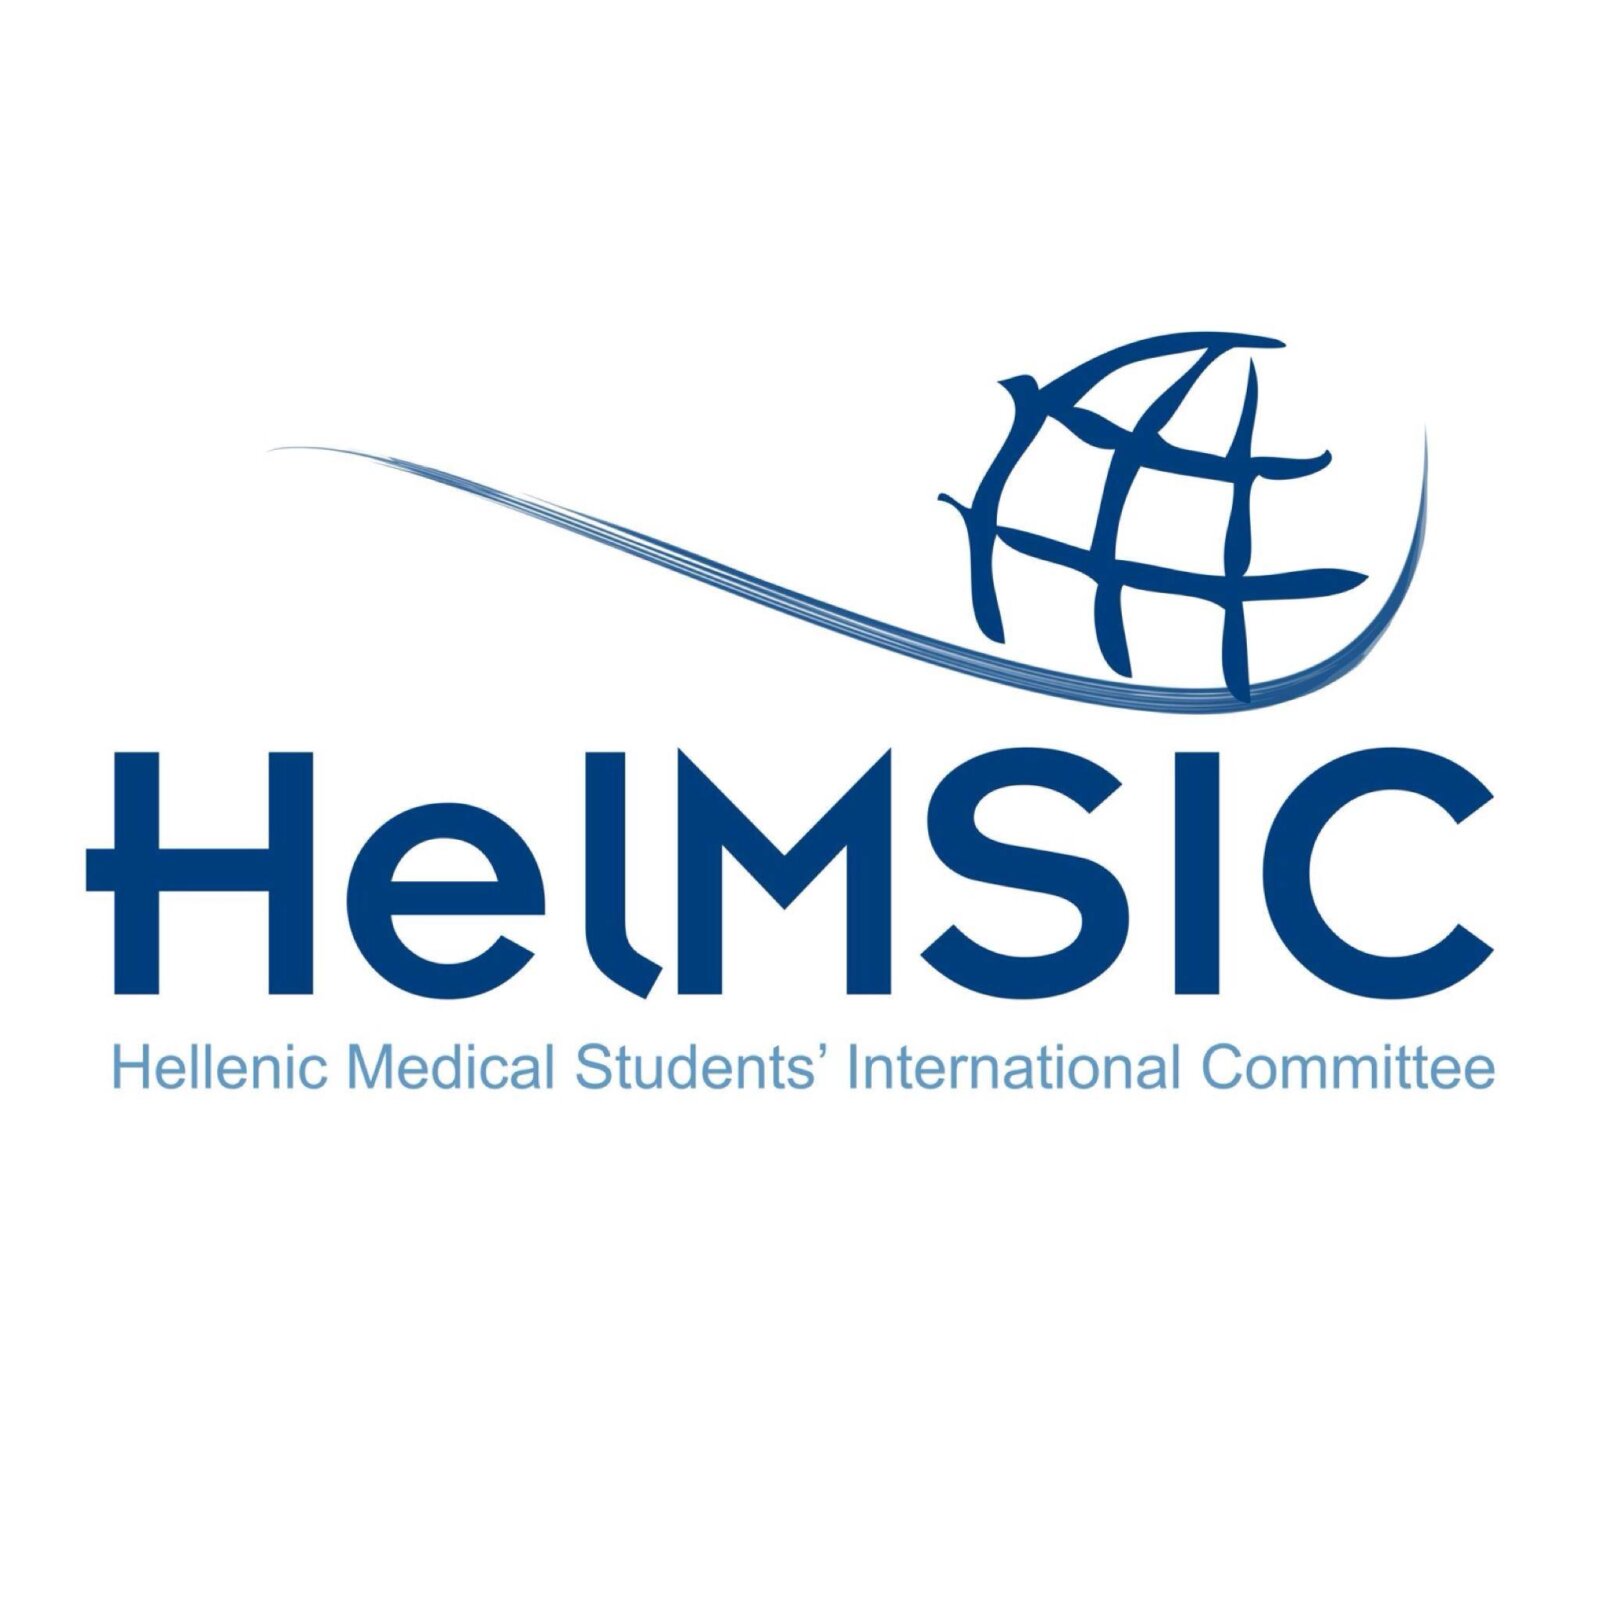 HelMSIC - Hellenic Medical Students' International Committee